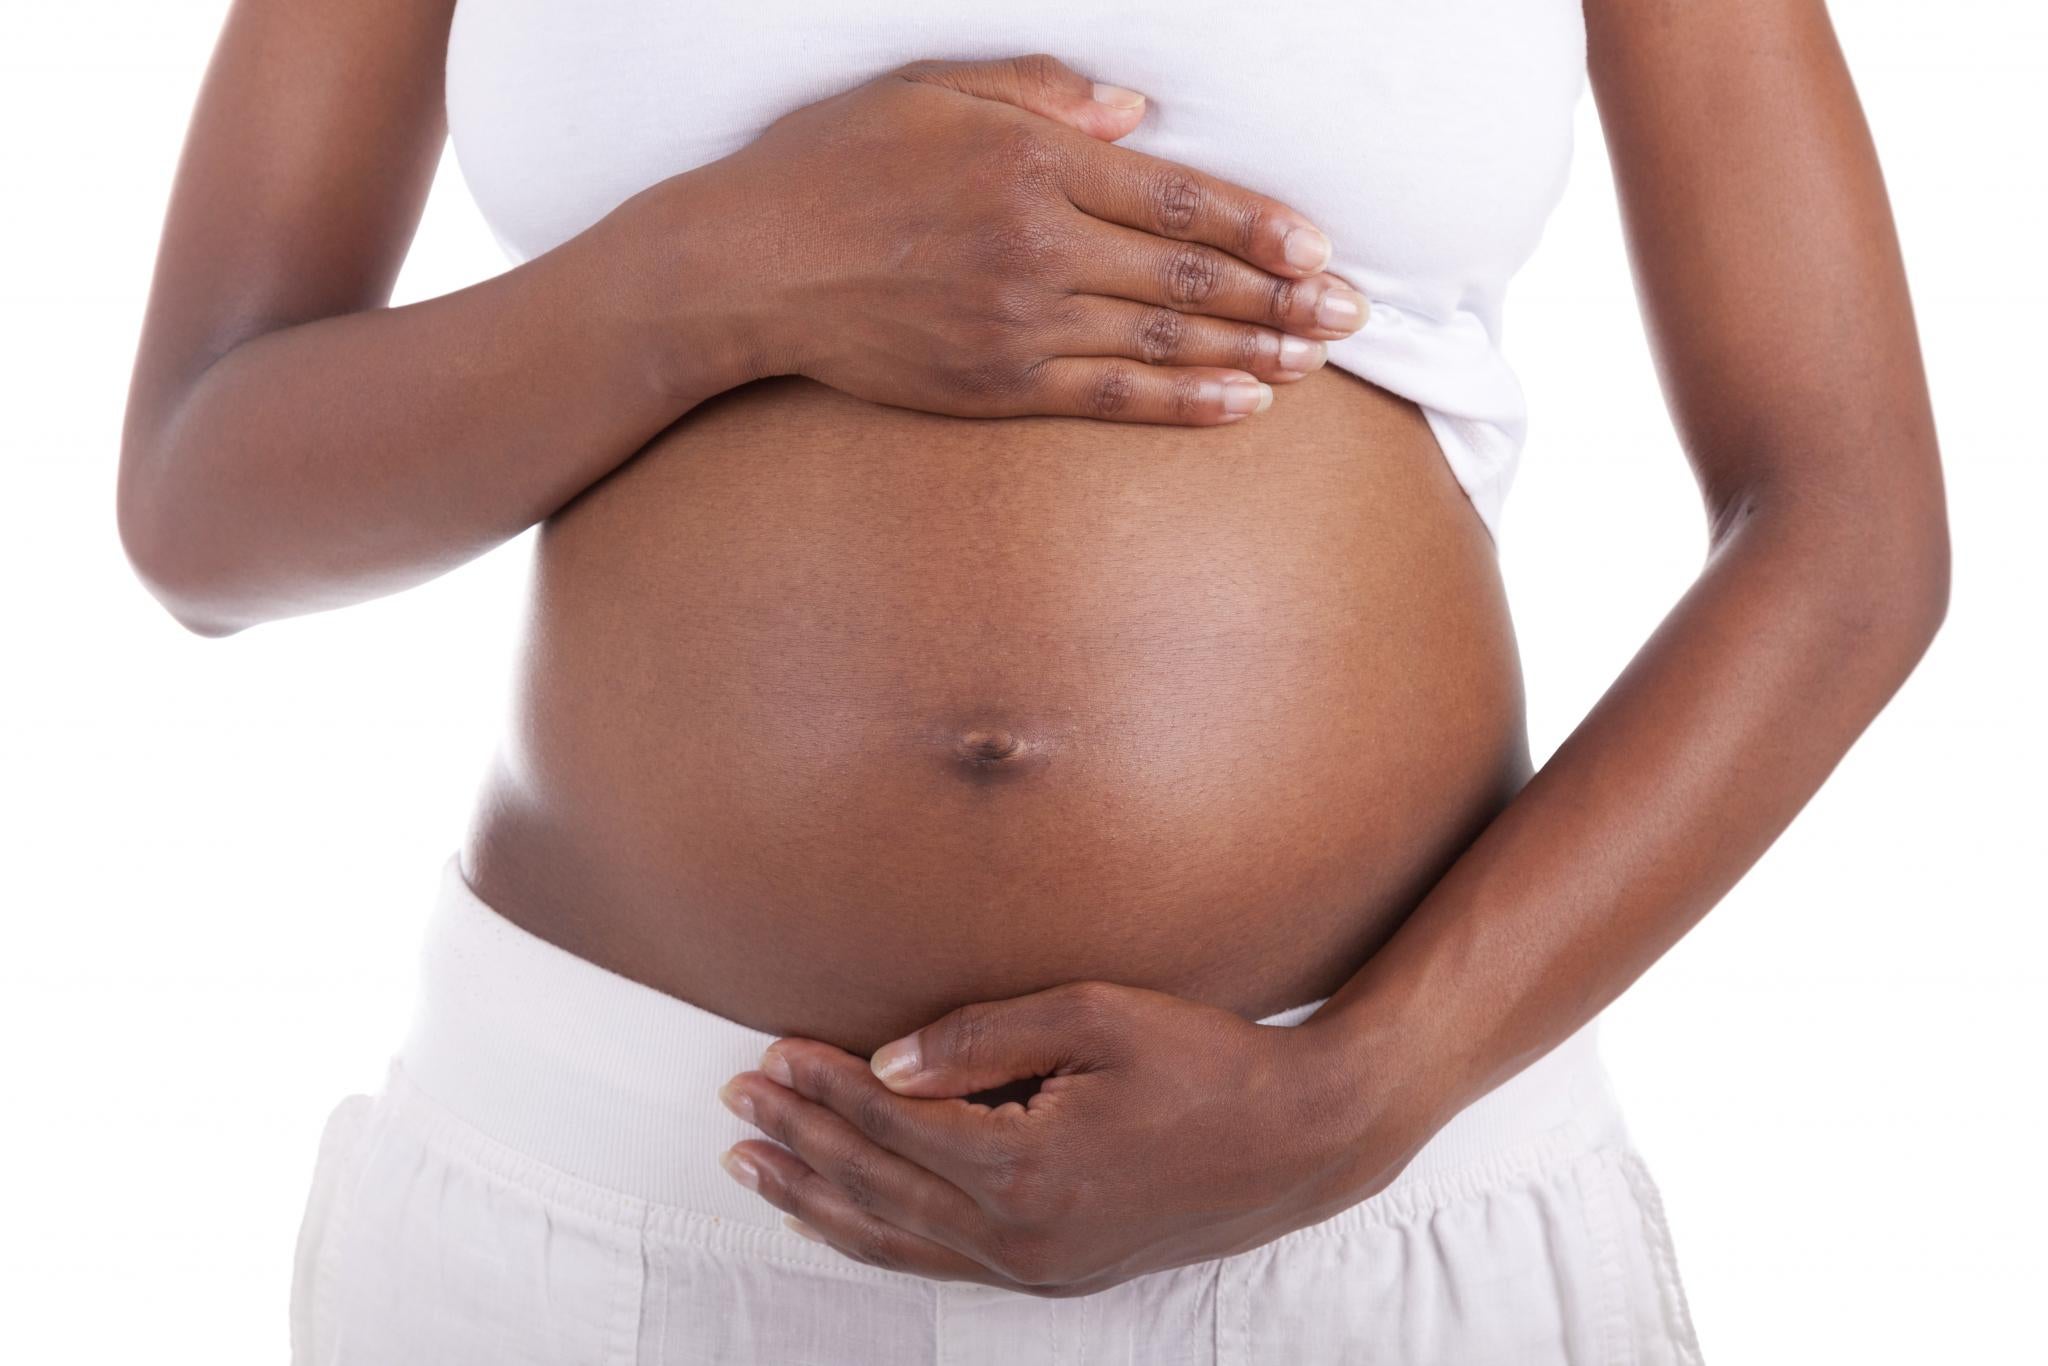 Why Summer Pregnancies May Be More Risky